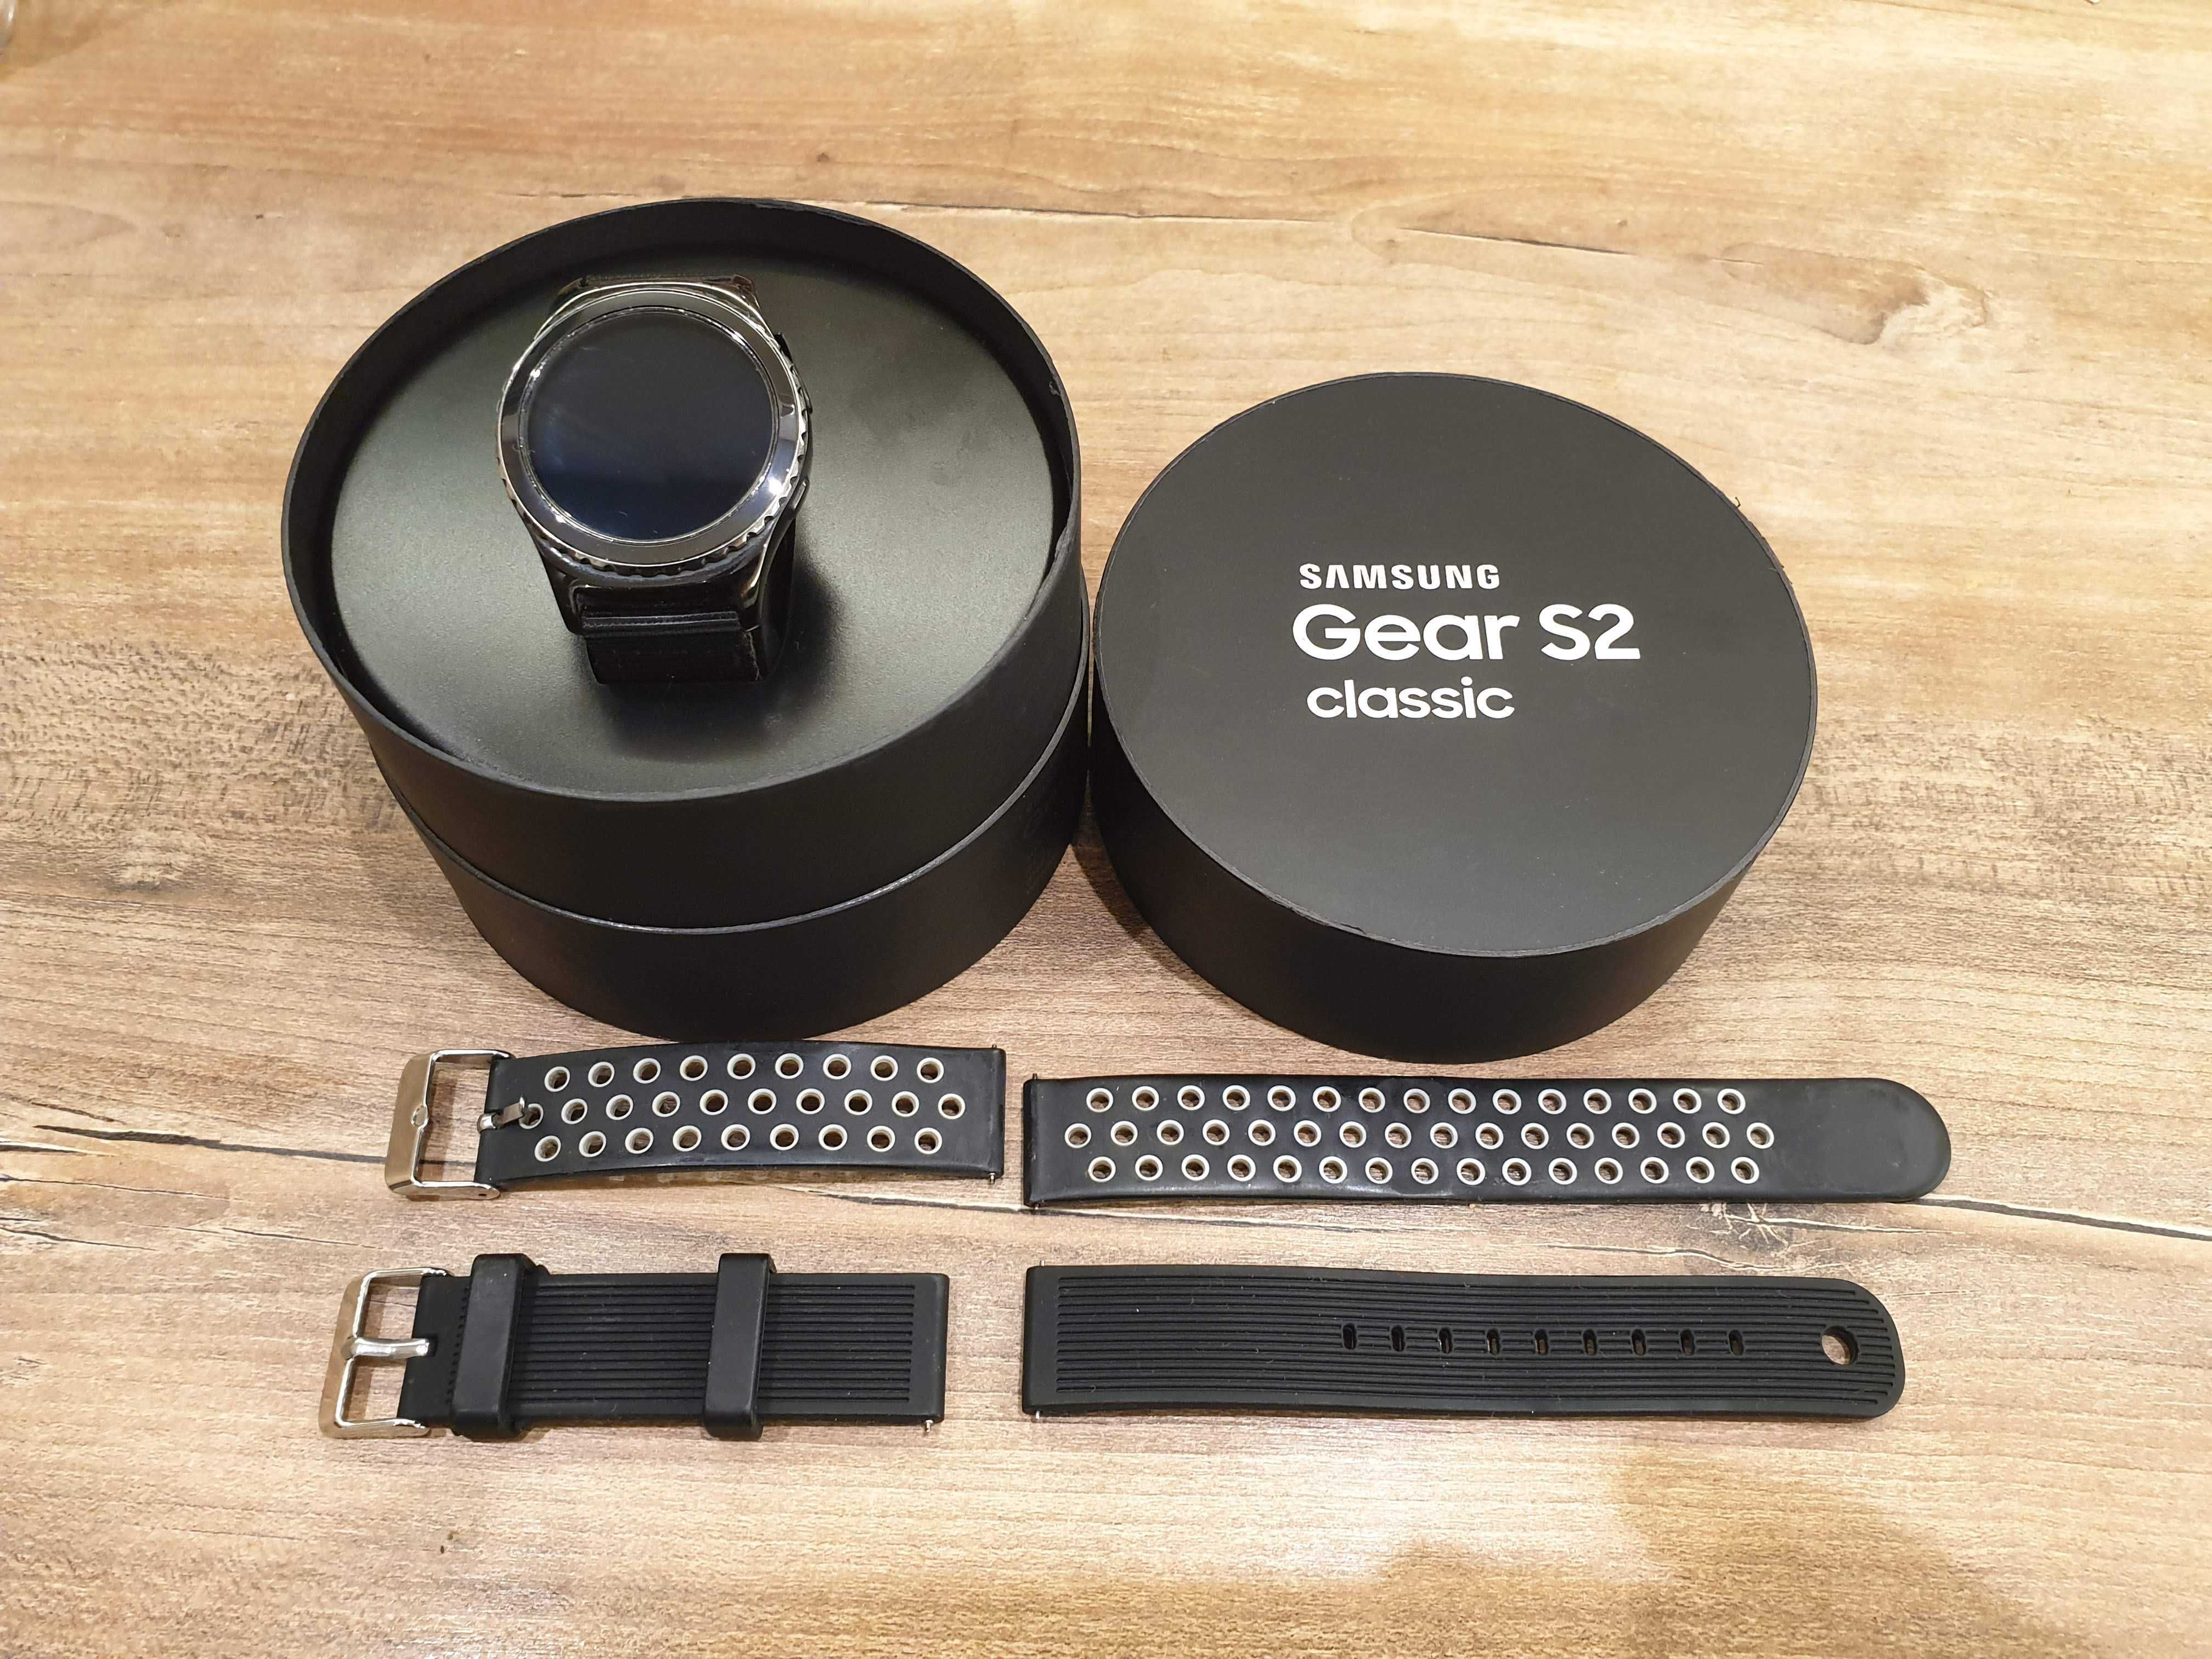 Samsung Gear S2 Classic - Smart watch